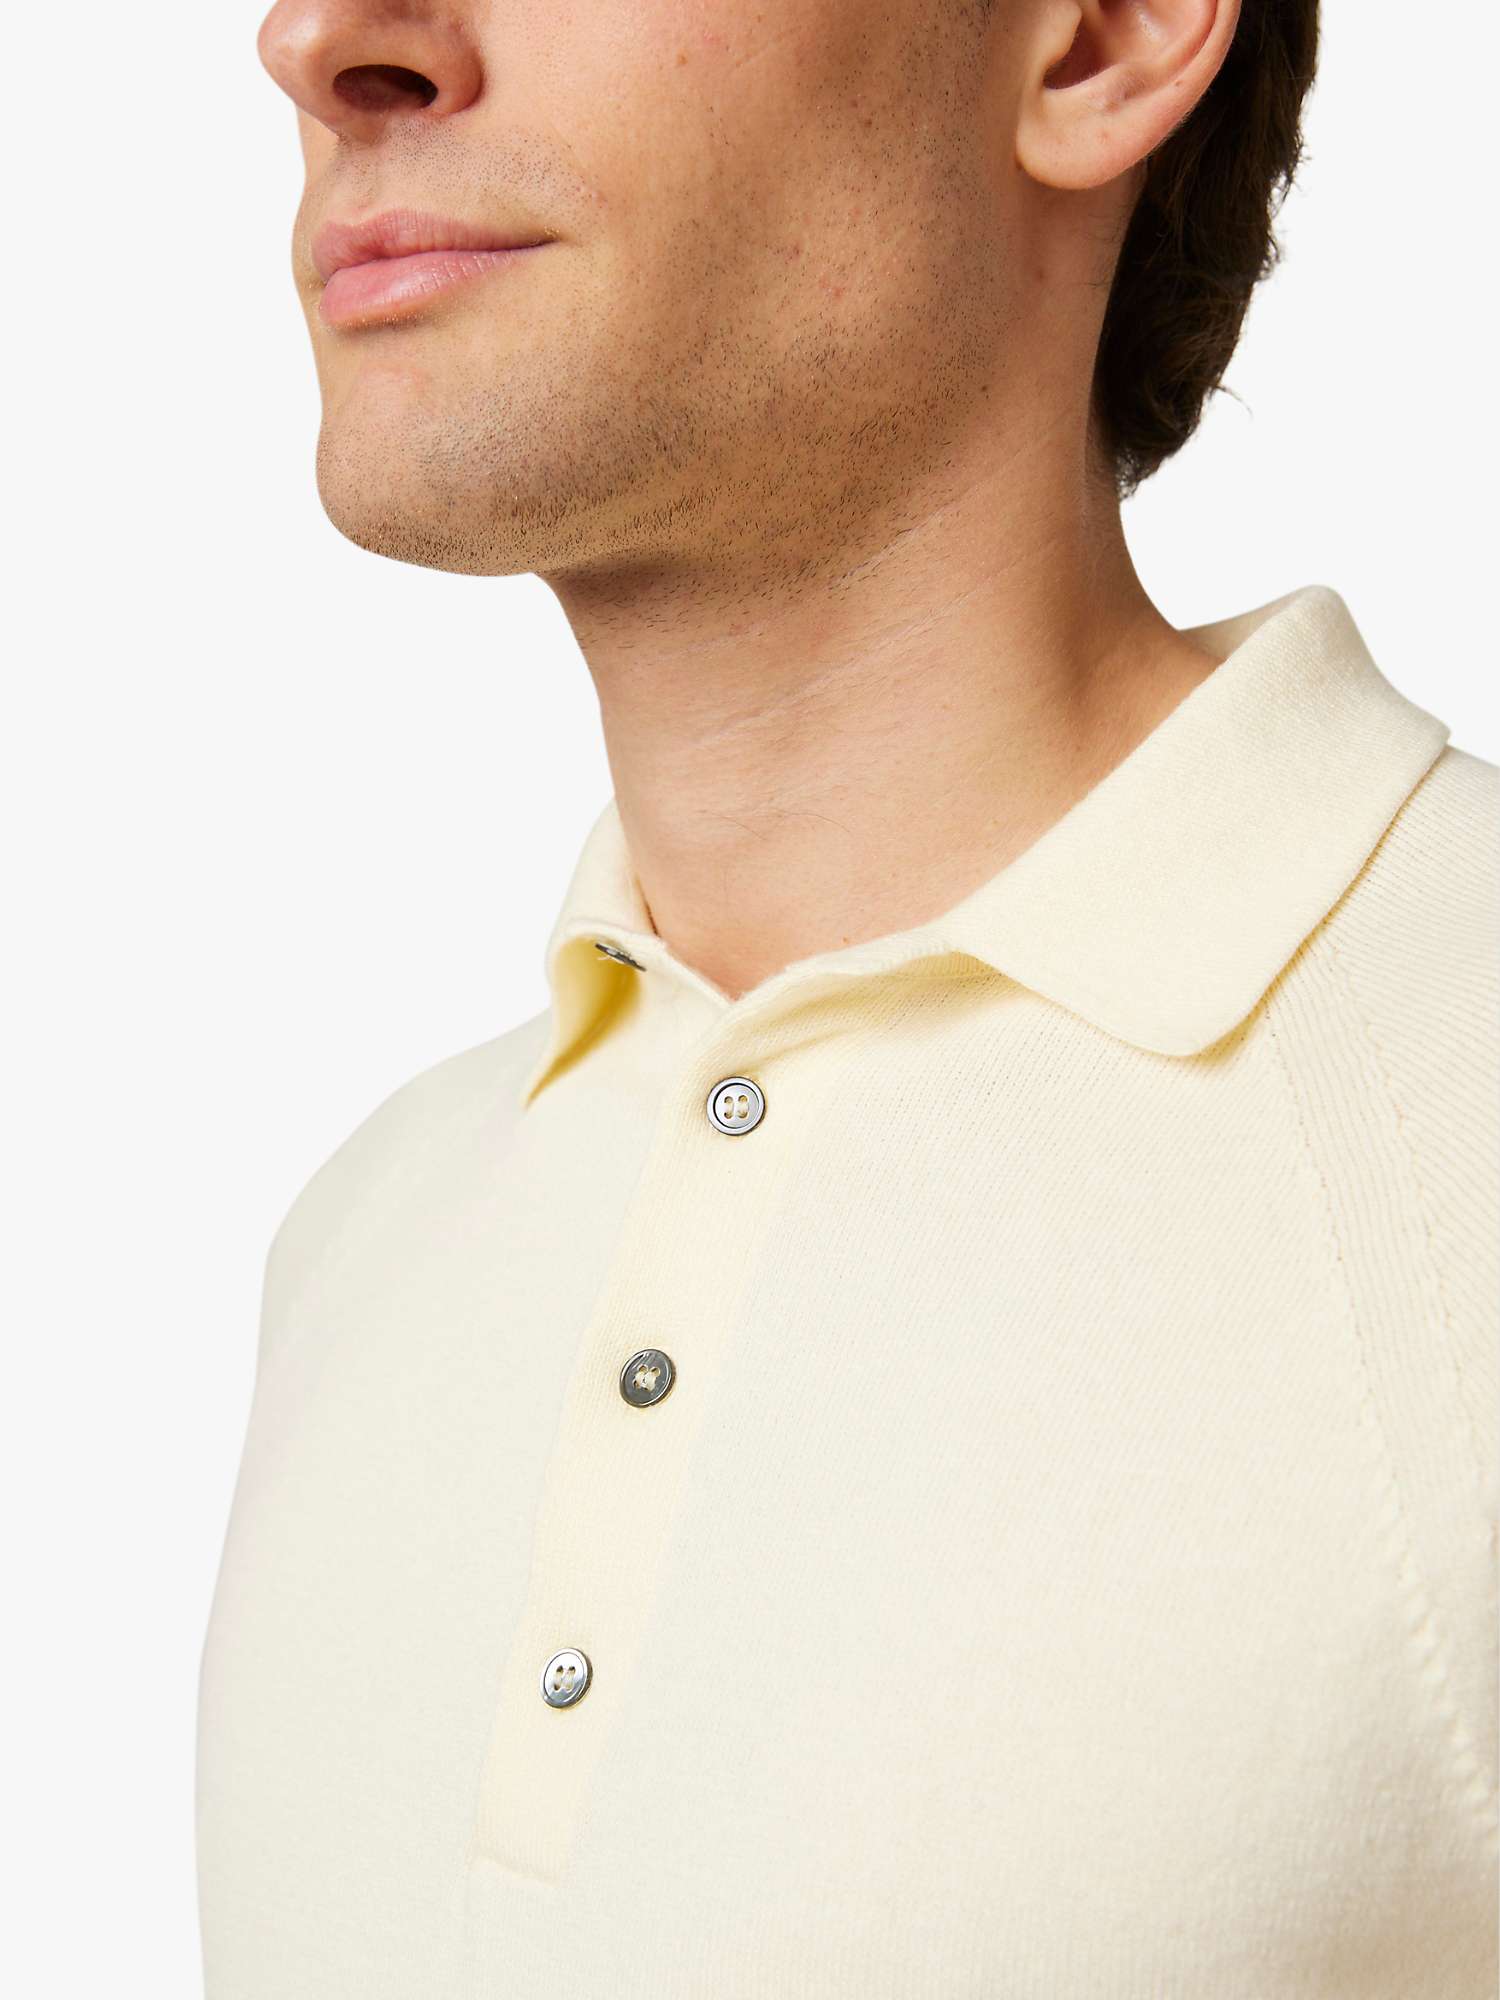 Buy Peregrine Jones Polo Shirt, White Online at johnlewis.com